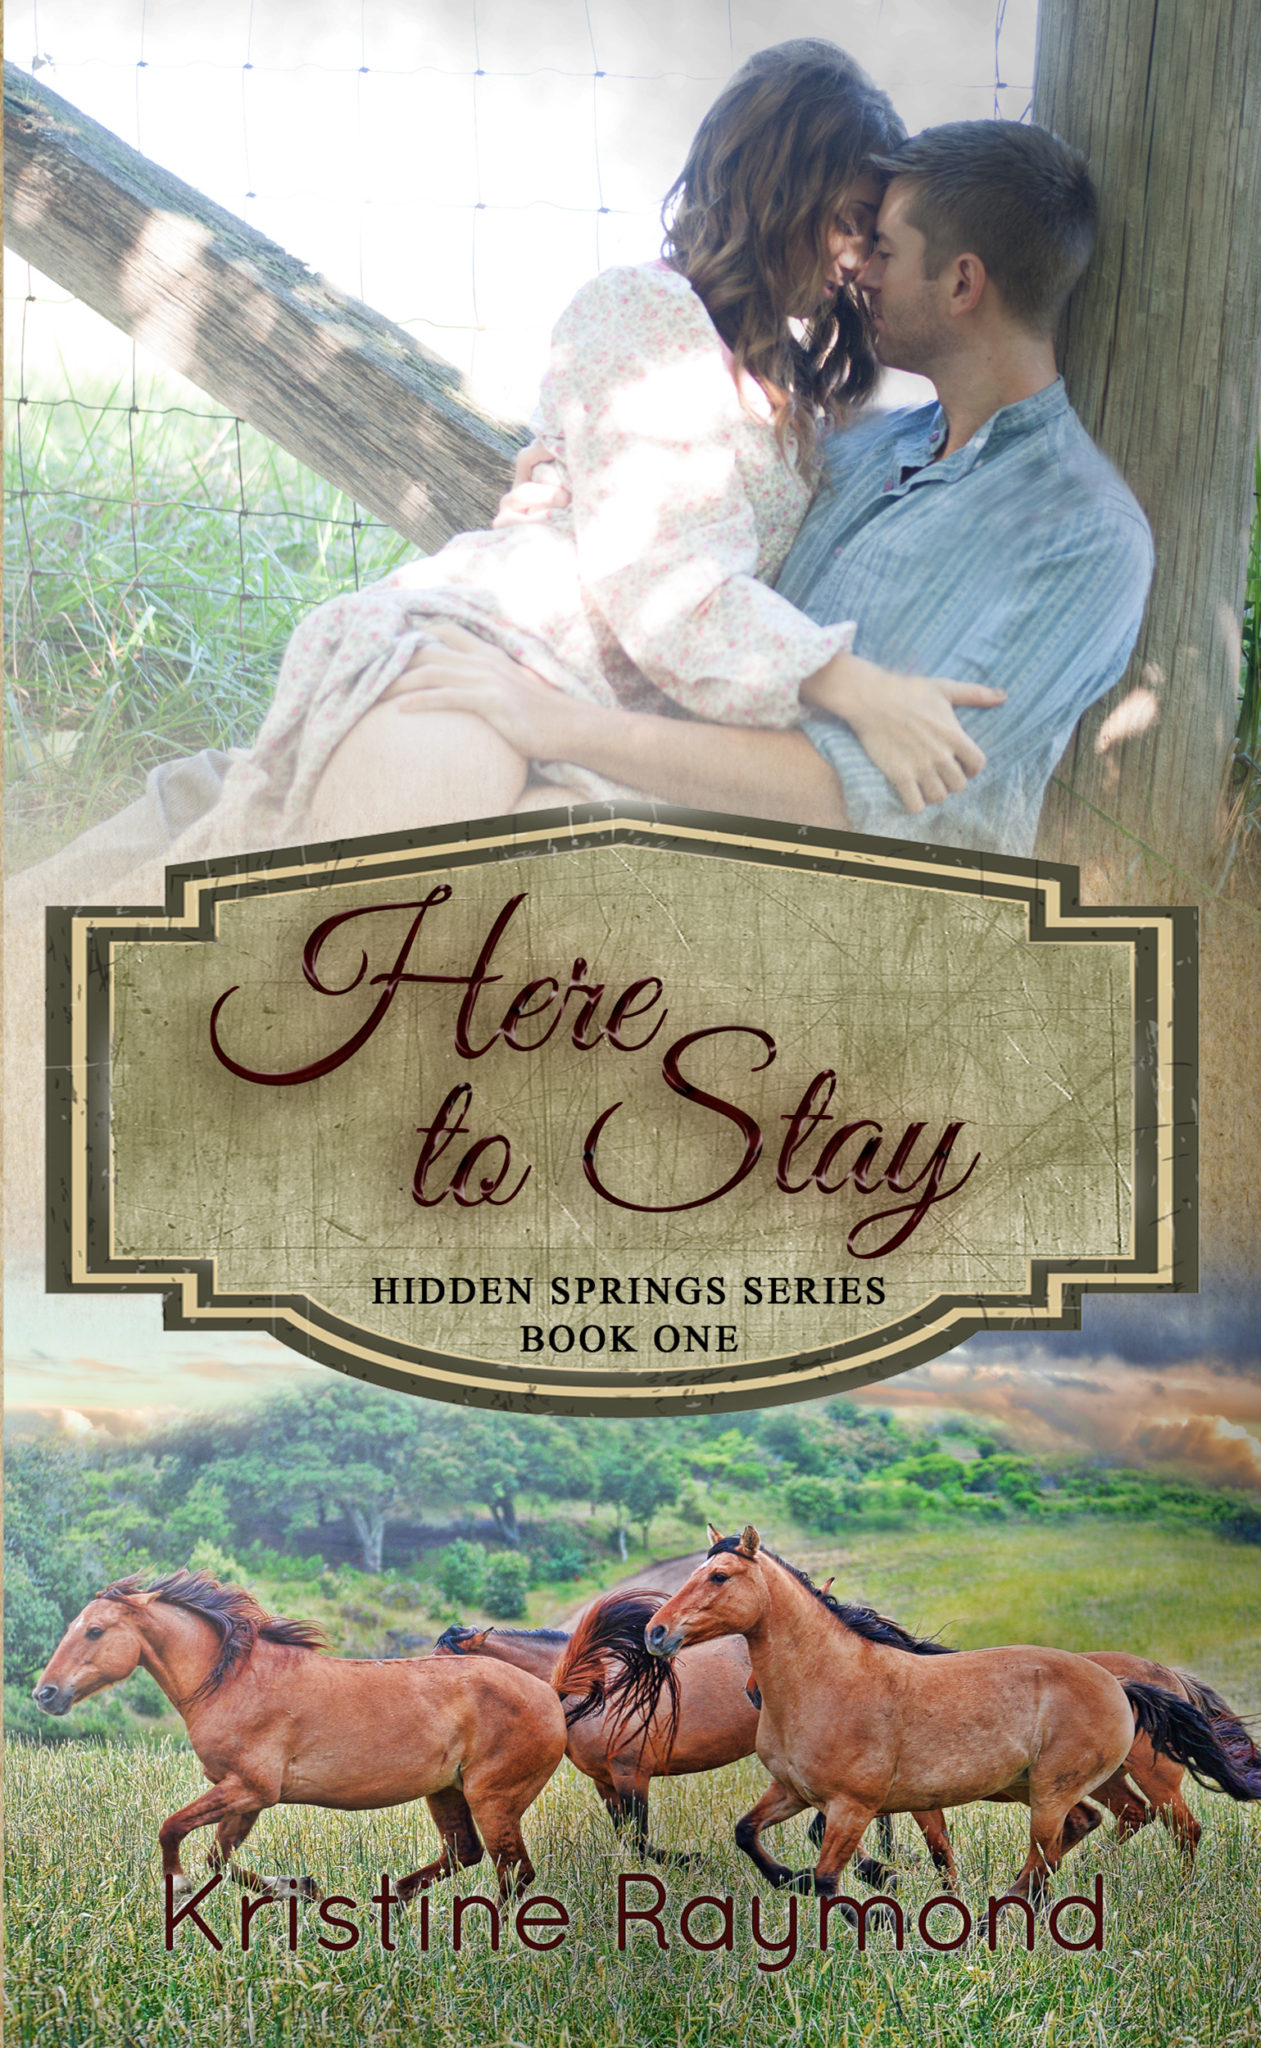 FREE: Here to Stay by Kristine Raymond